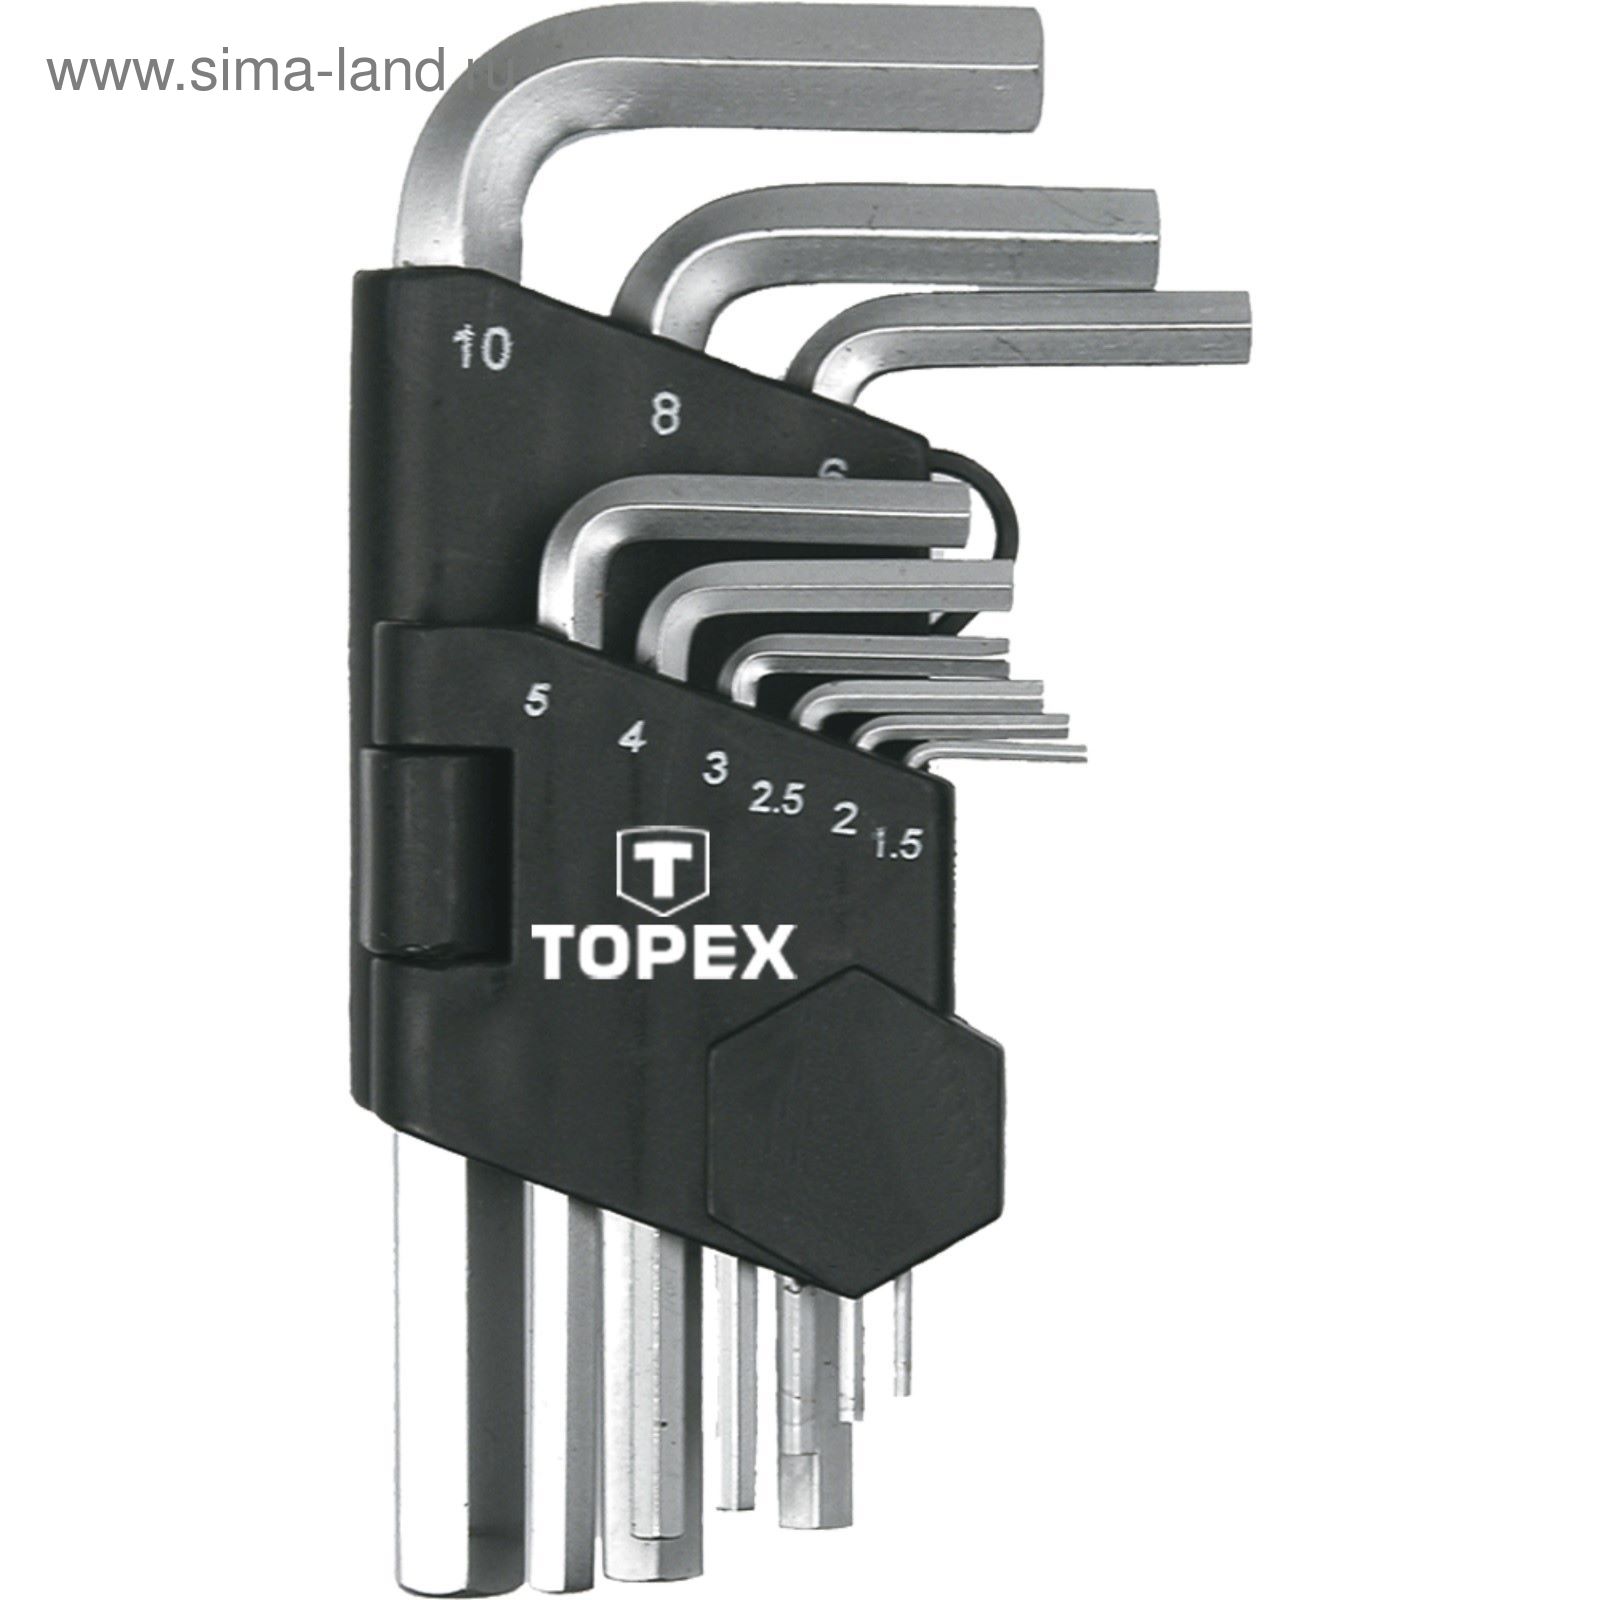 Ключи шестигранные TOPEX, 1.5-10 мм, набор 9 шт.